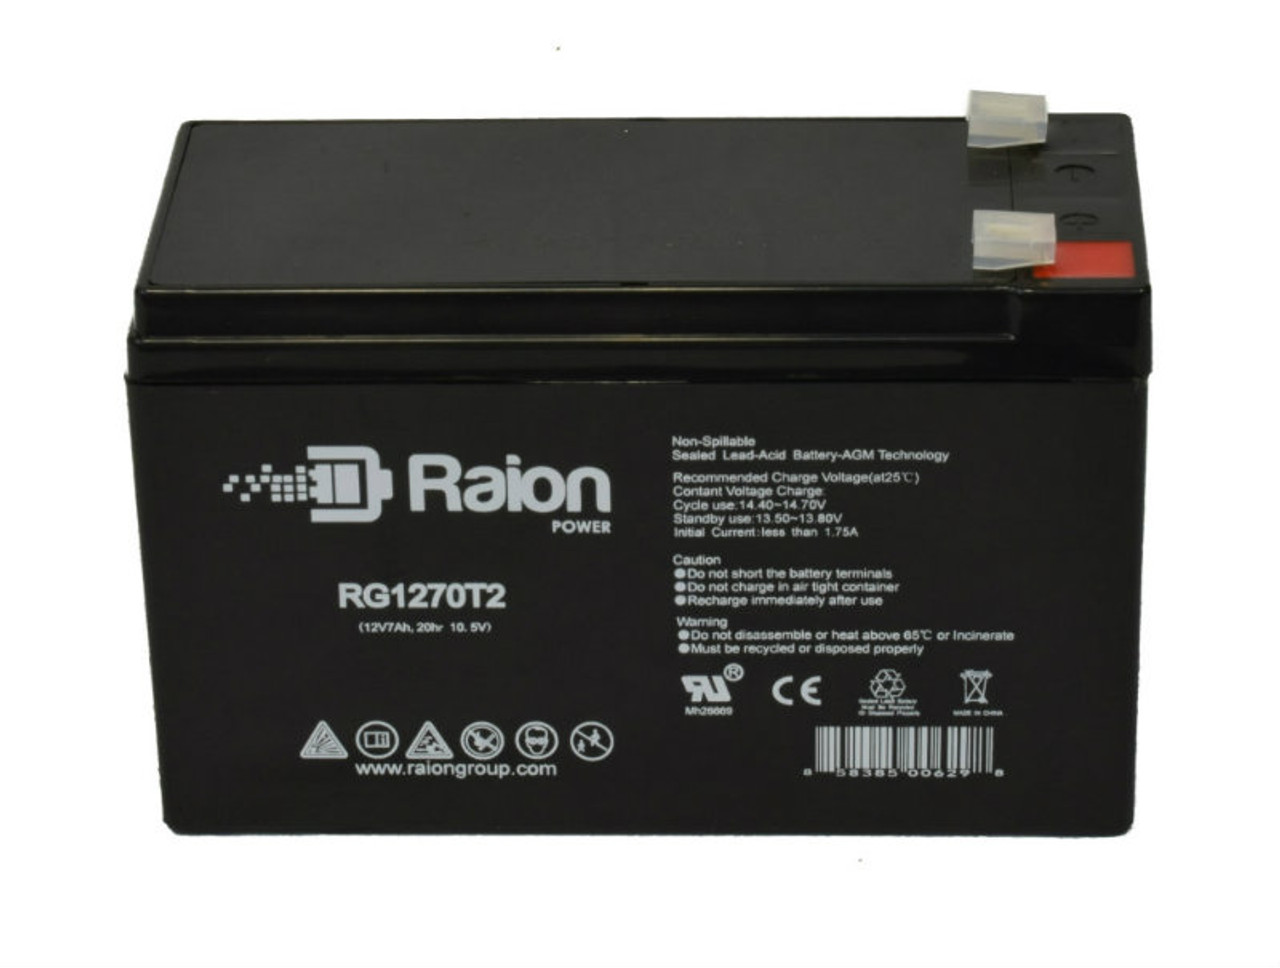 Raion Power RG1270T1 12V 7Ah Lead Acid Battery for Harmar SL300 Pinnacle Stairlift